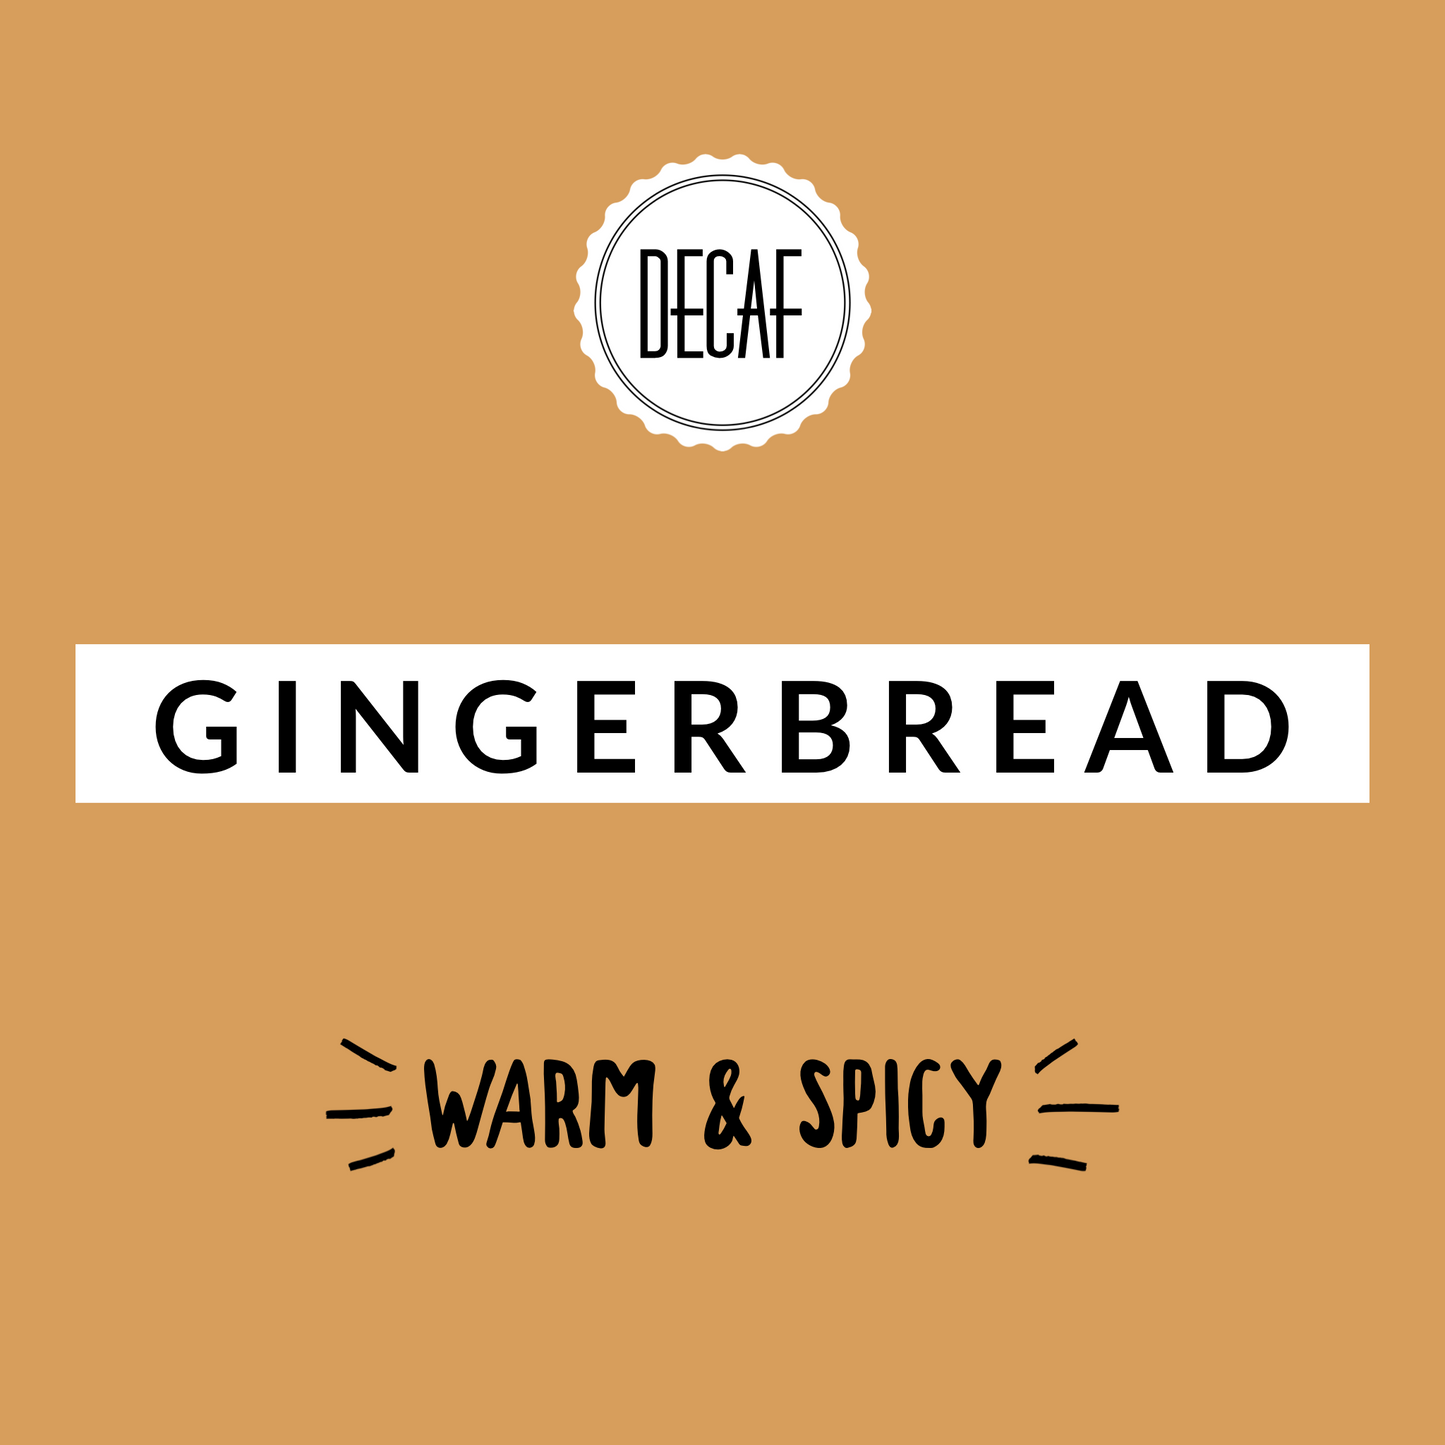 Gingerbread Decaf